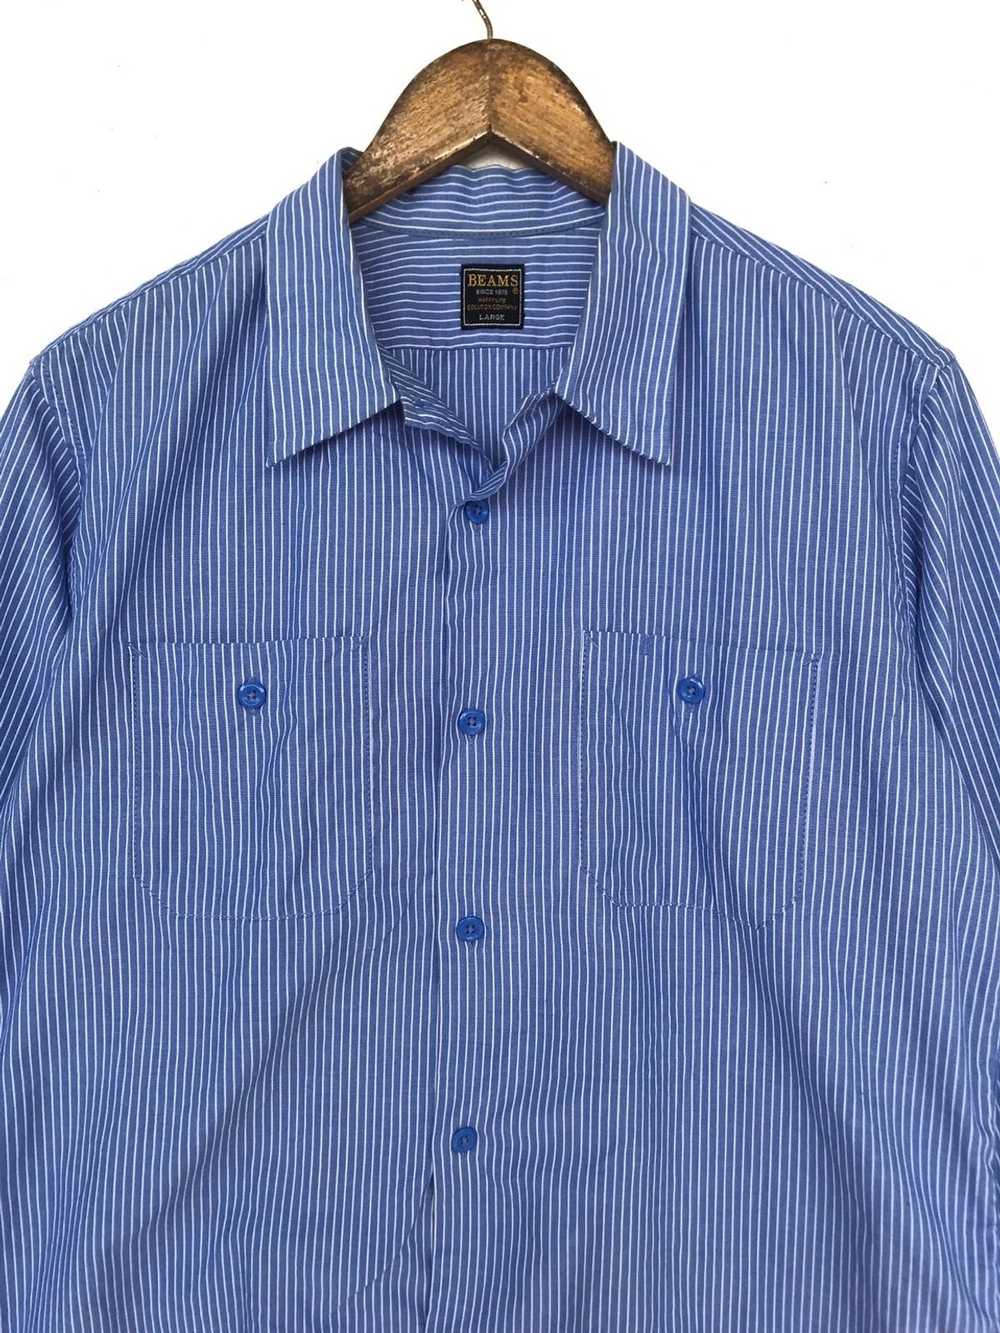 Beams Plus × Vintage Button ups Stripes shirts wi… - image 2